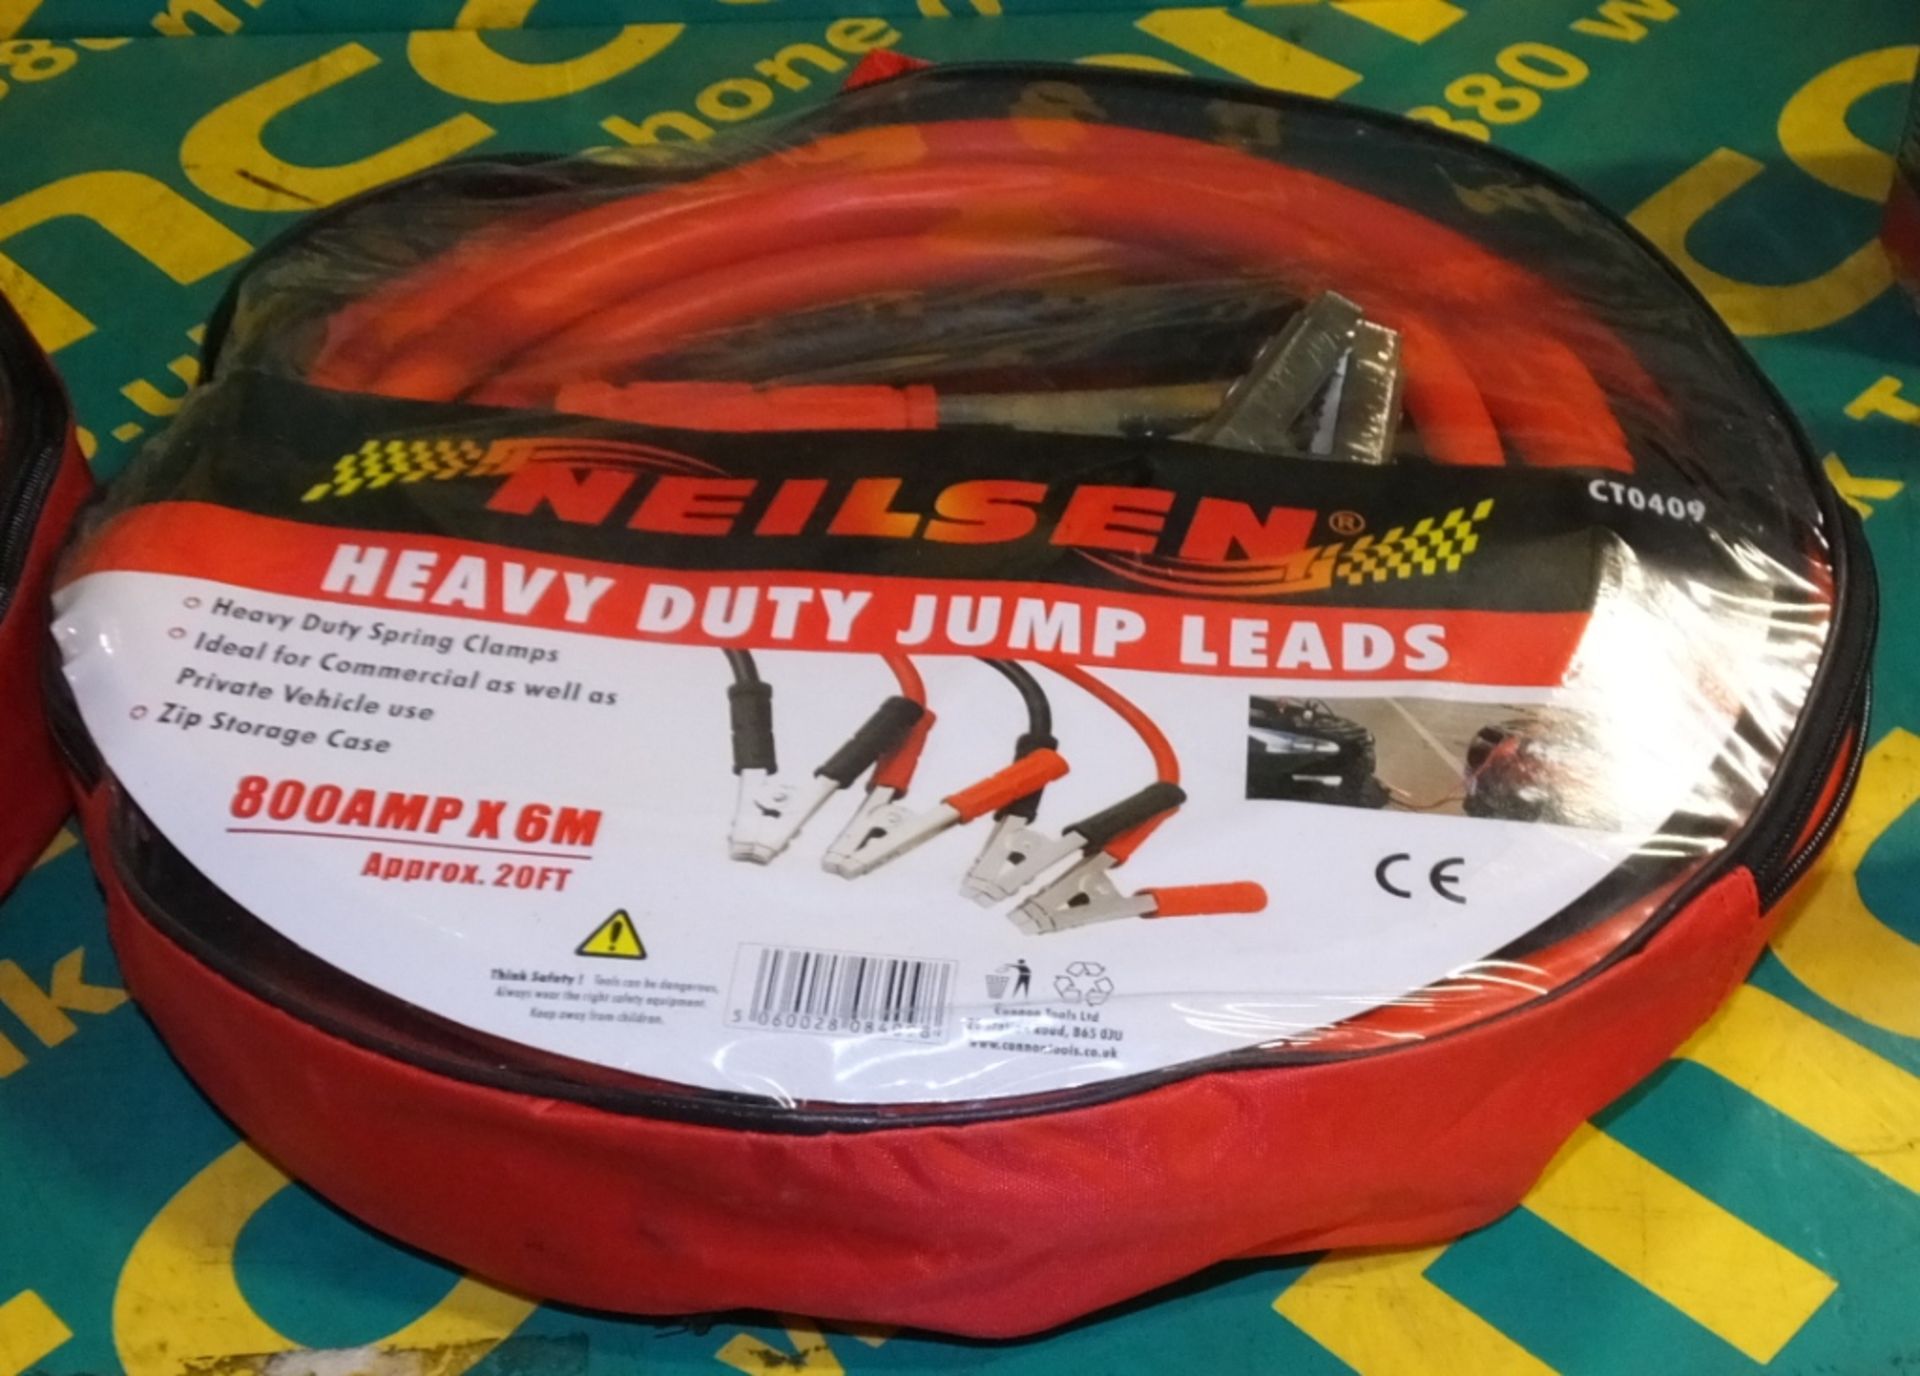 Neilsen Heavy Duty Jump Leads - 800amp x 6M